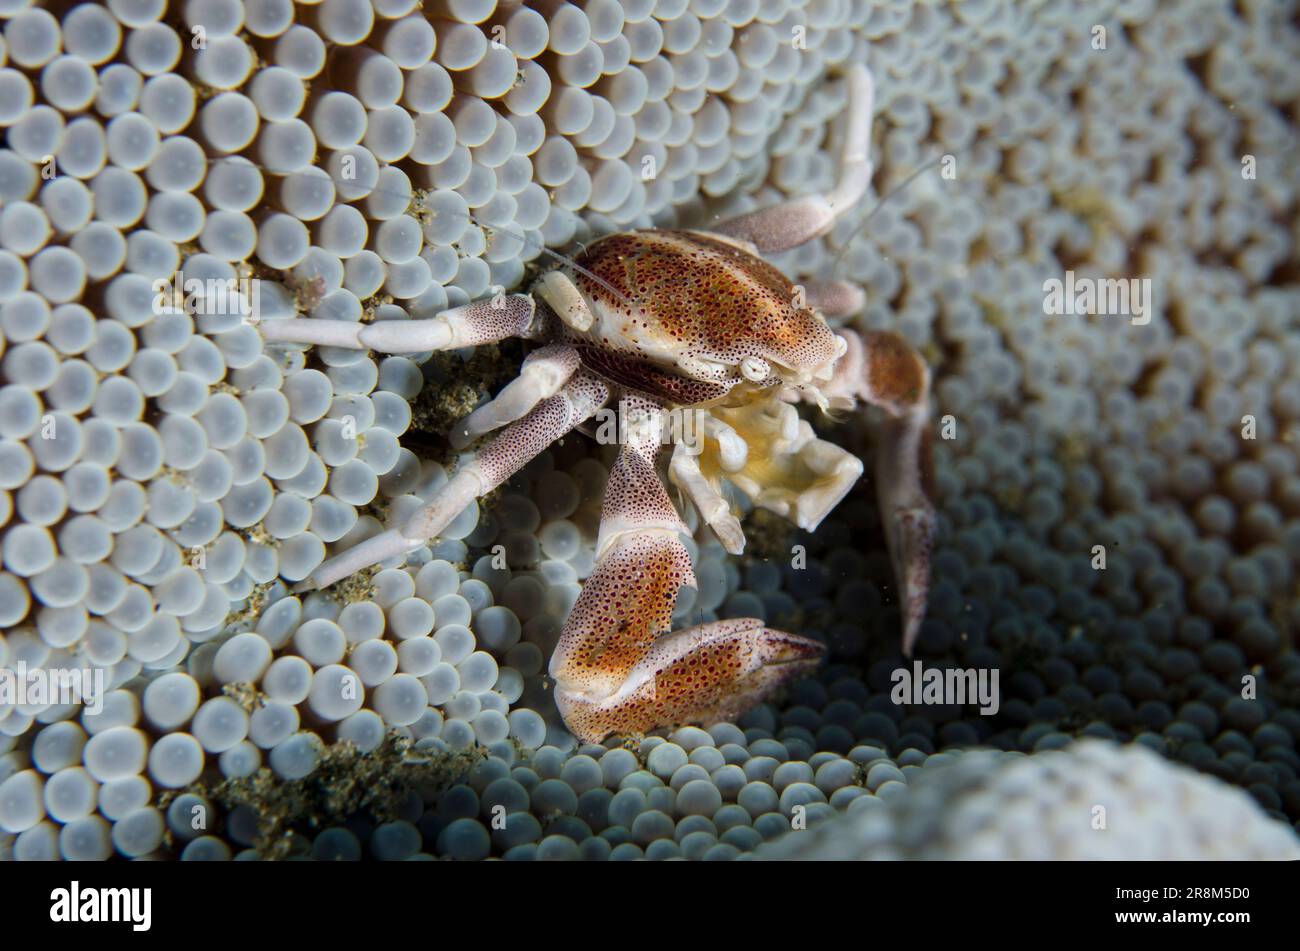 Porcelain Crab, Neopetrolisthes maculatus, on Giant Carpet Anemone, Stichodactyla gigantea, Laha dive site, Ambon, Maluku, Indonesia, Banda Sea Stock Photo